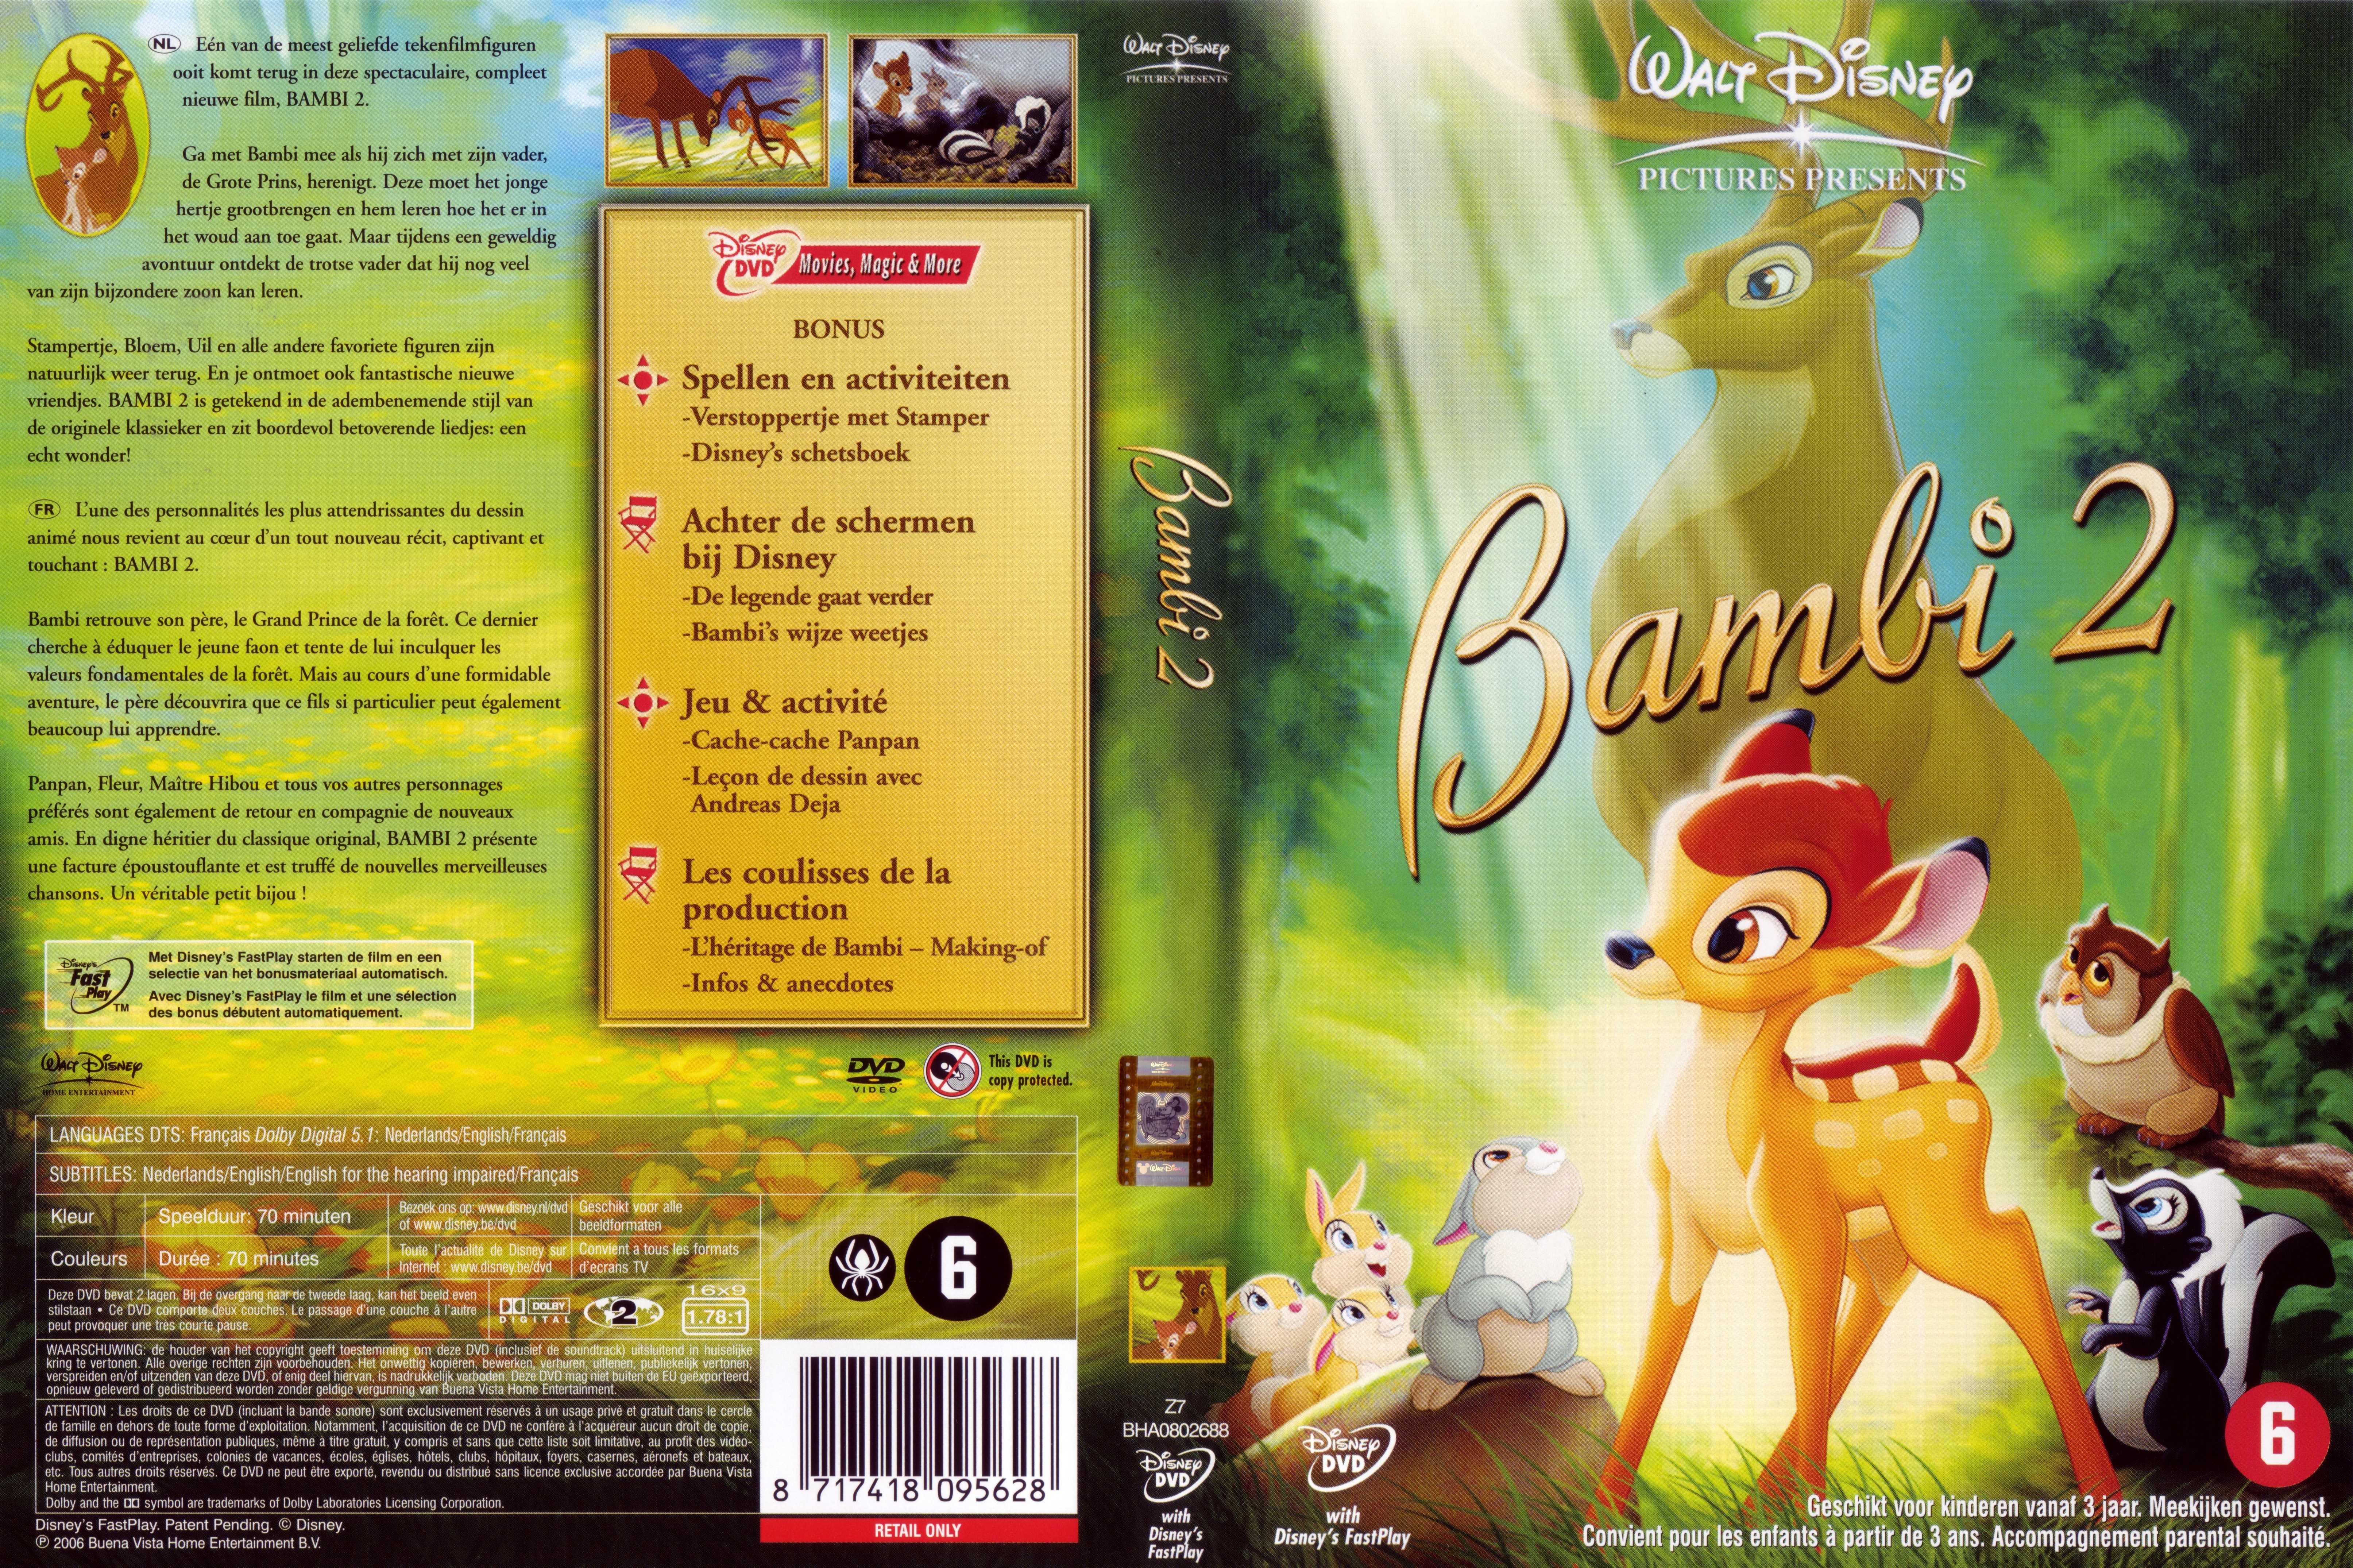 Jaquette DVD Bambi 2 v2